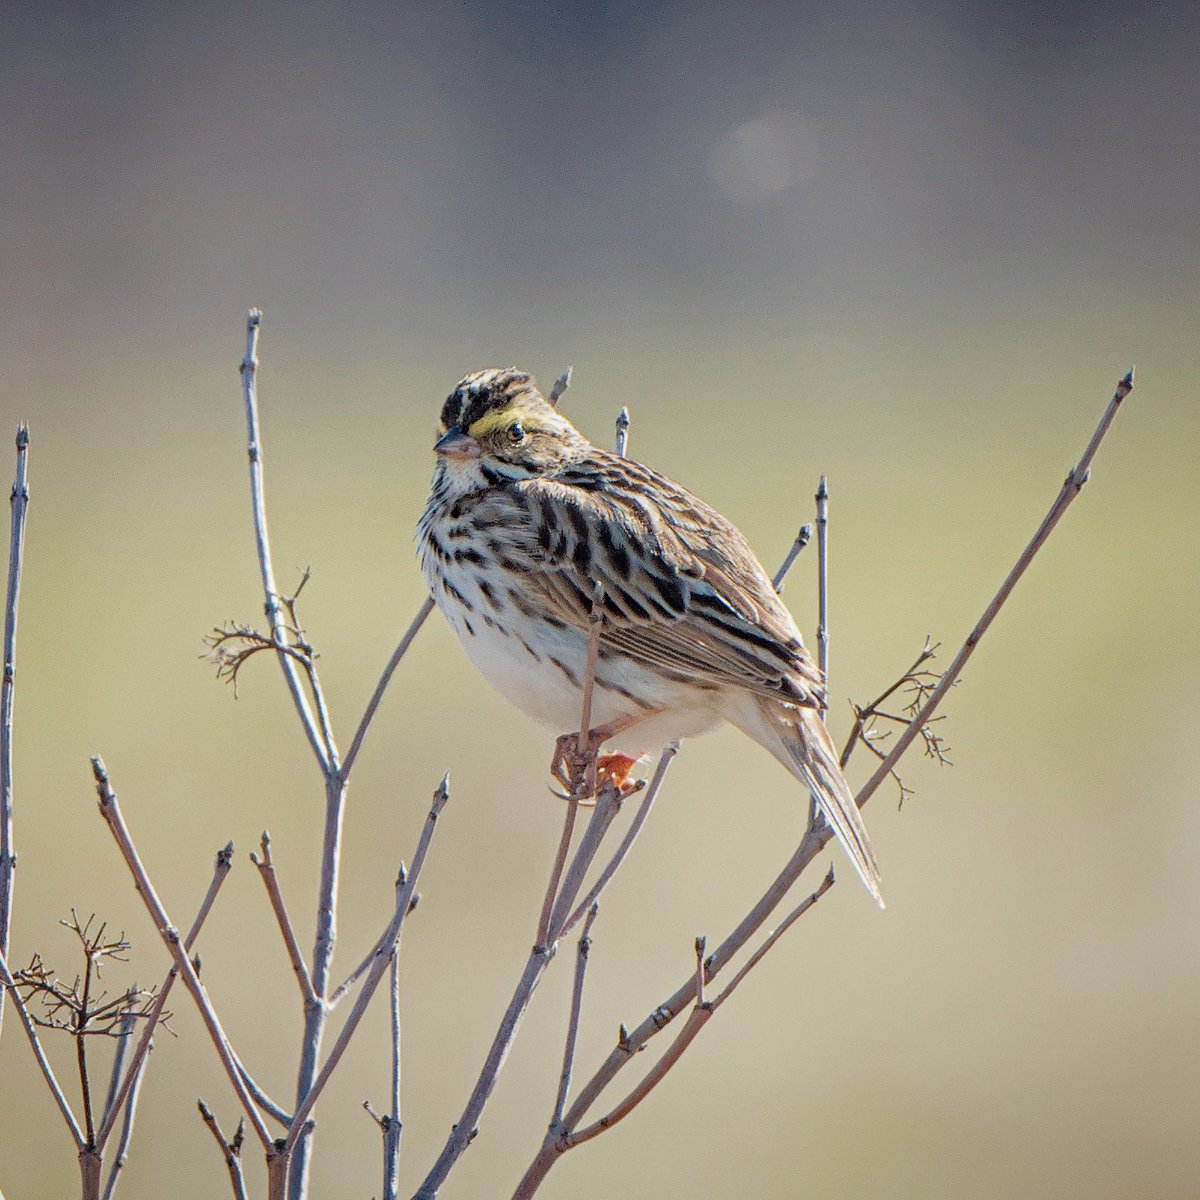 #sparrow #birds #birdphotography #nature #birdwatching #wildlife #longlens #NaturePhotograhpy